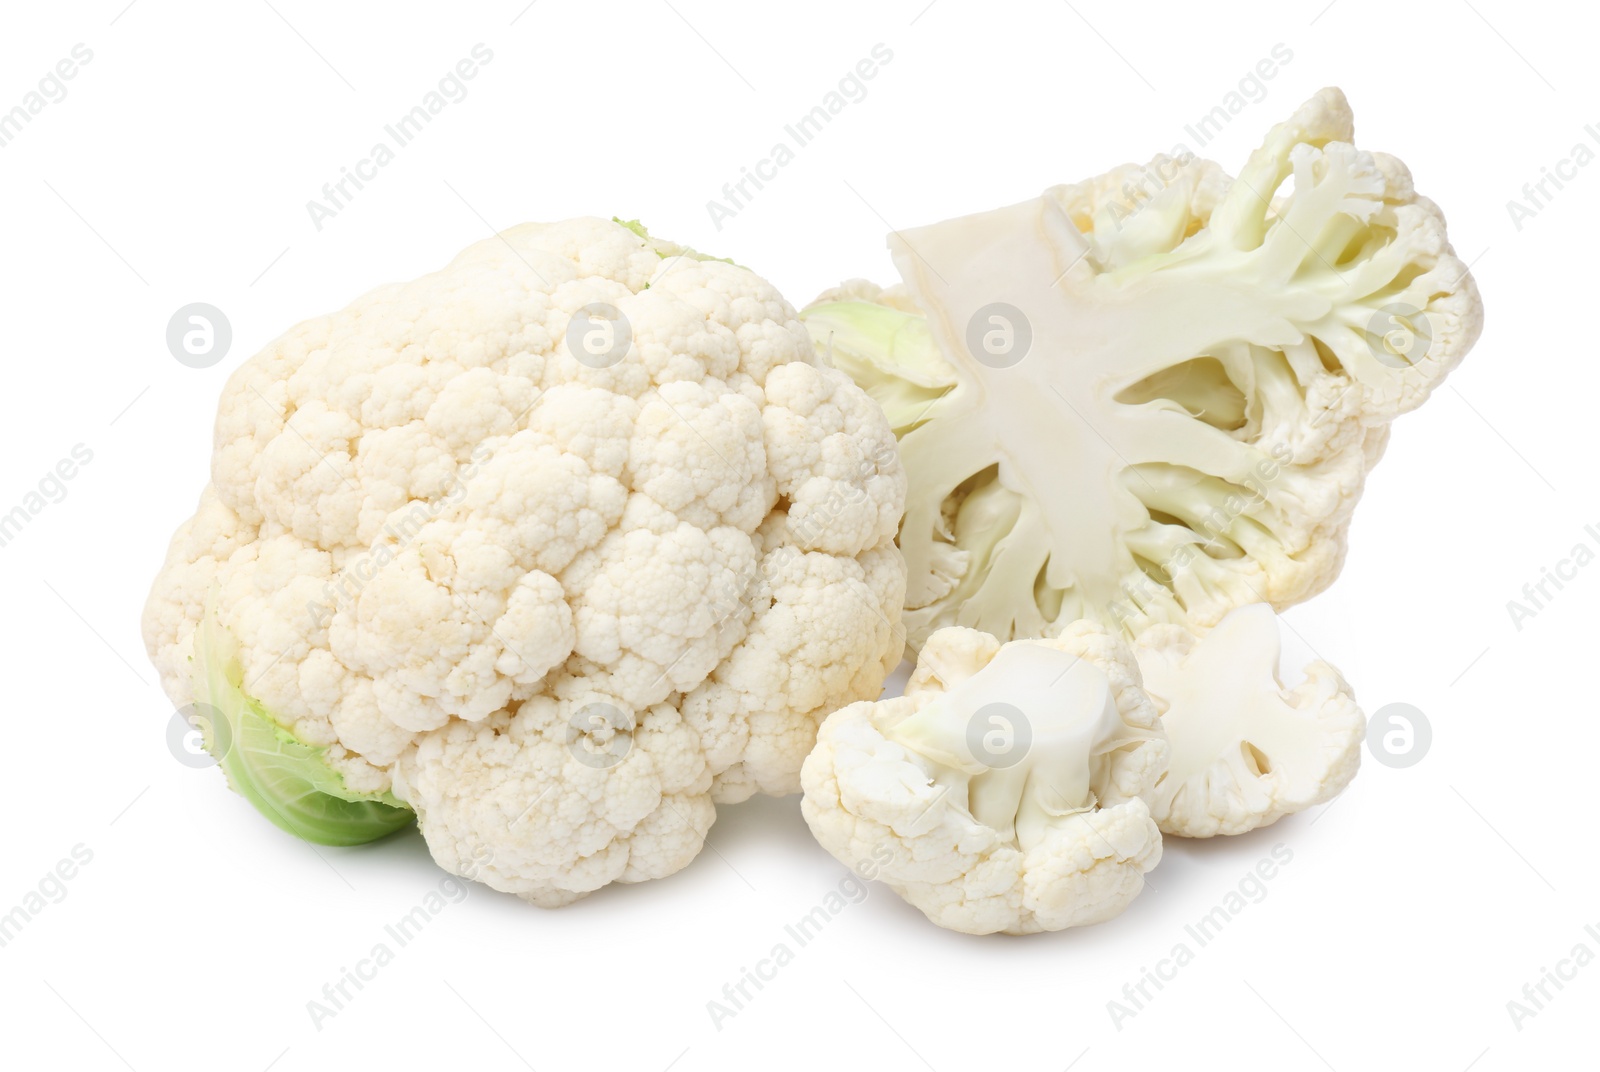 Photo of Cut and whole cauliflowers on white background